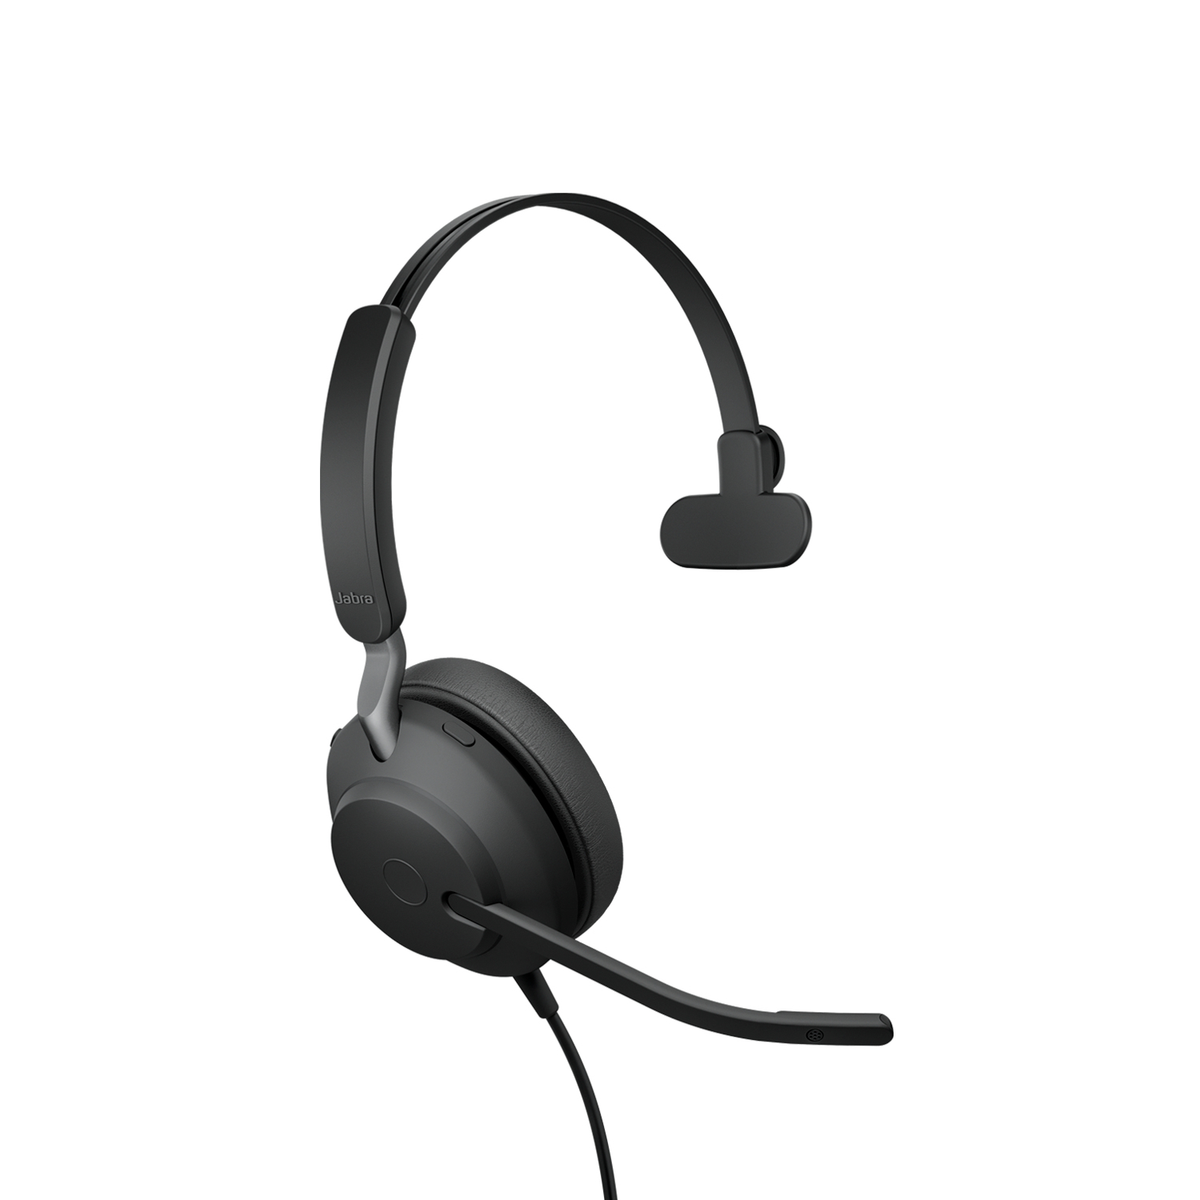 GN Kopfhörer Schwarz AUDIO Bluetooth 24189-889-899, On-ear